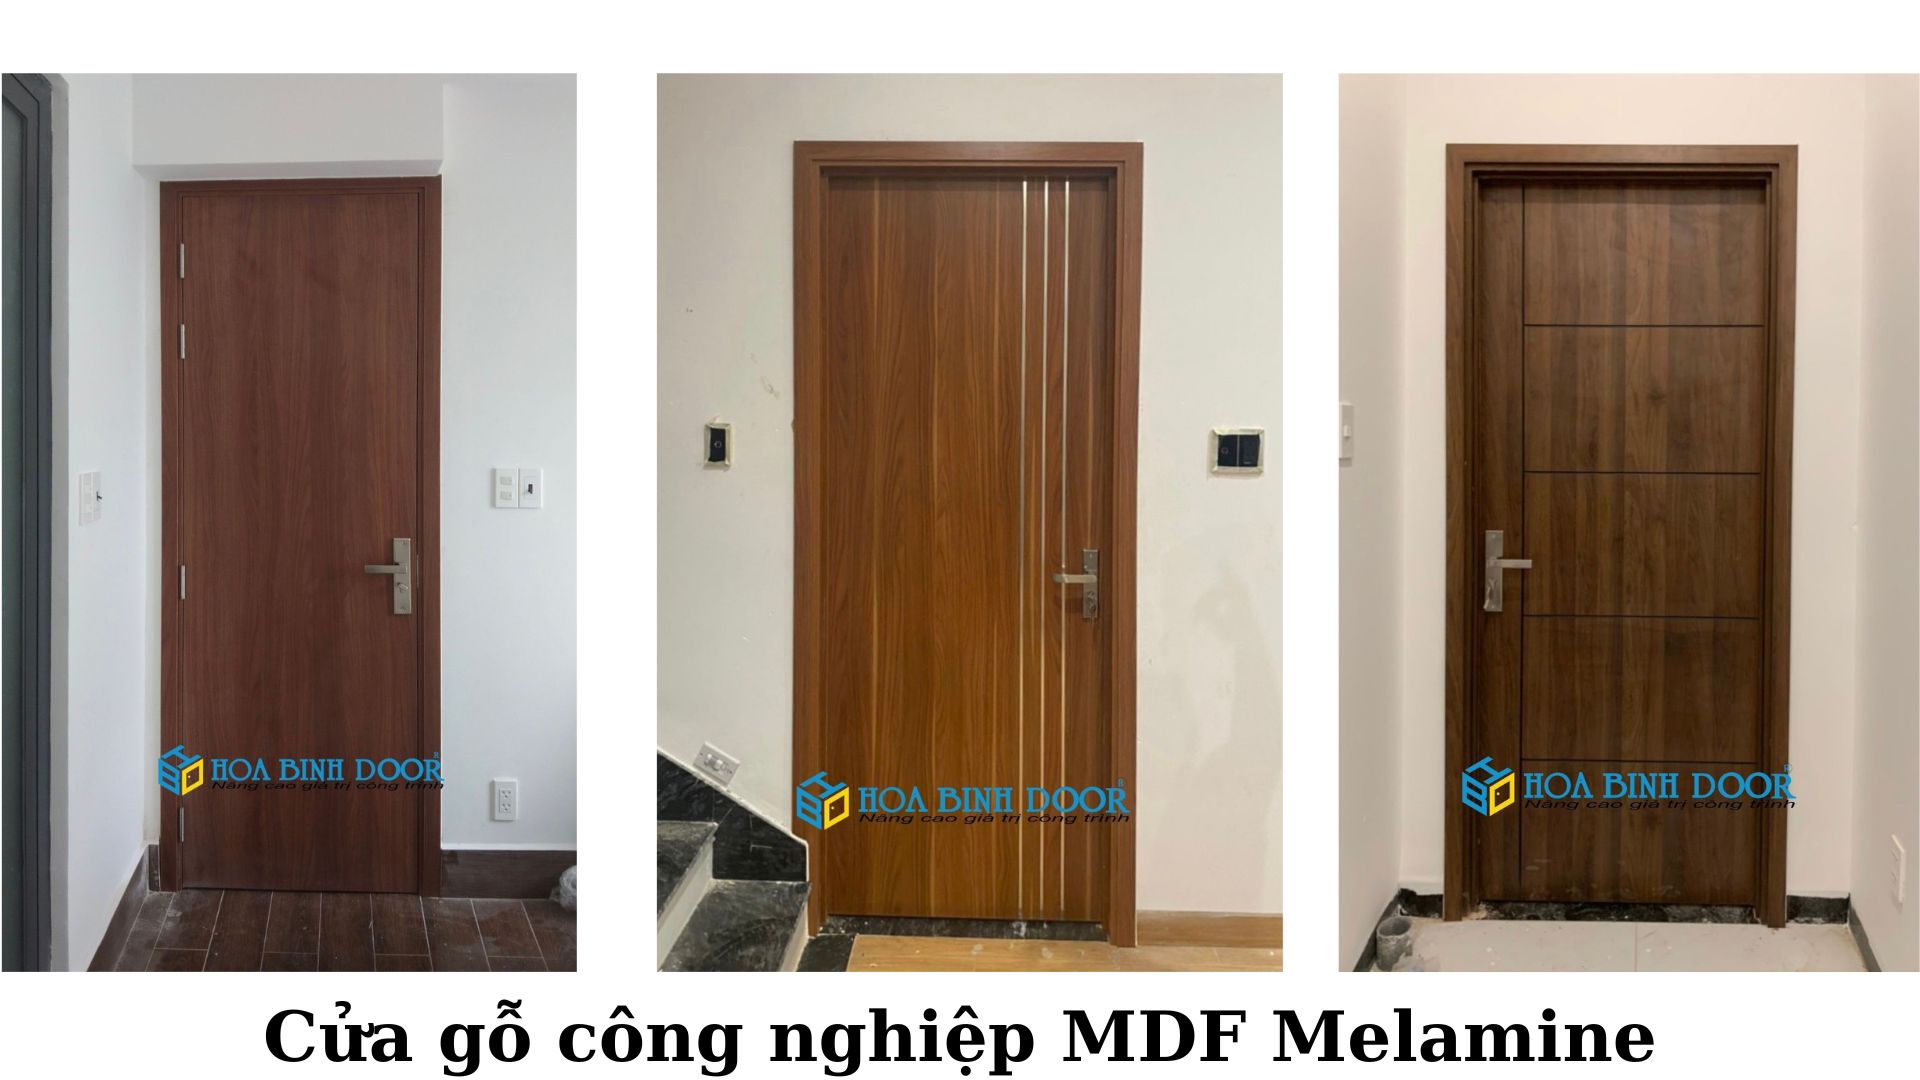 Cửa MDF Melamine tại Phú Nhuận - Cửa gỗ giá tốt